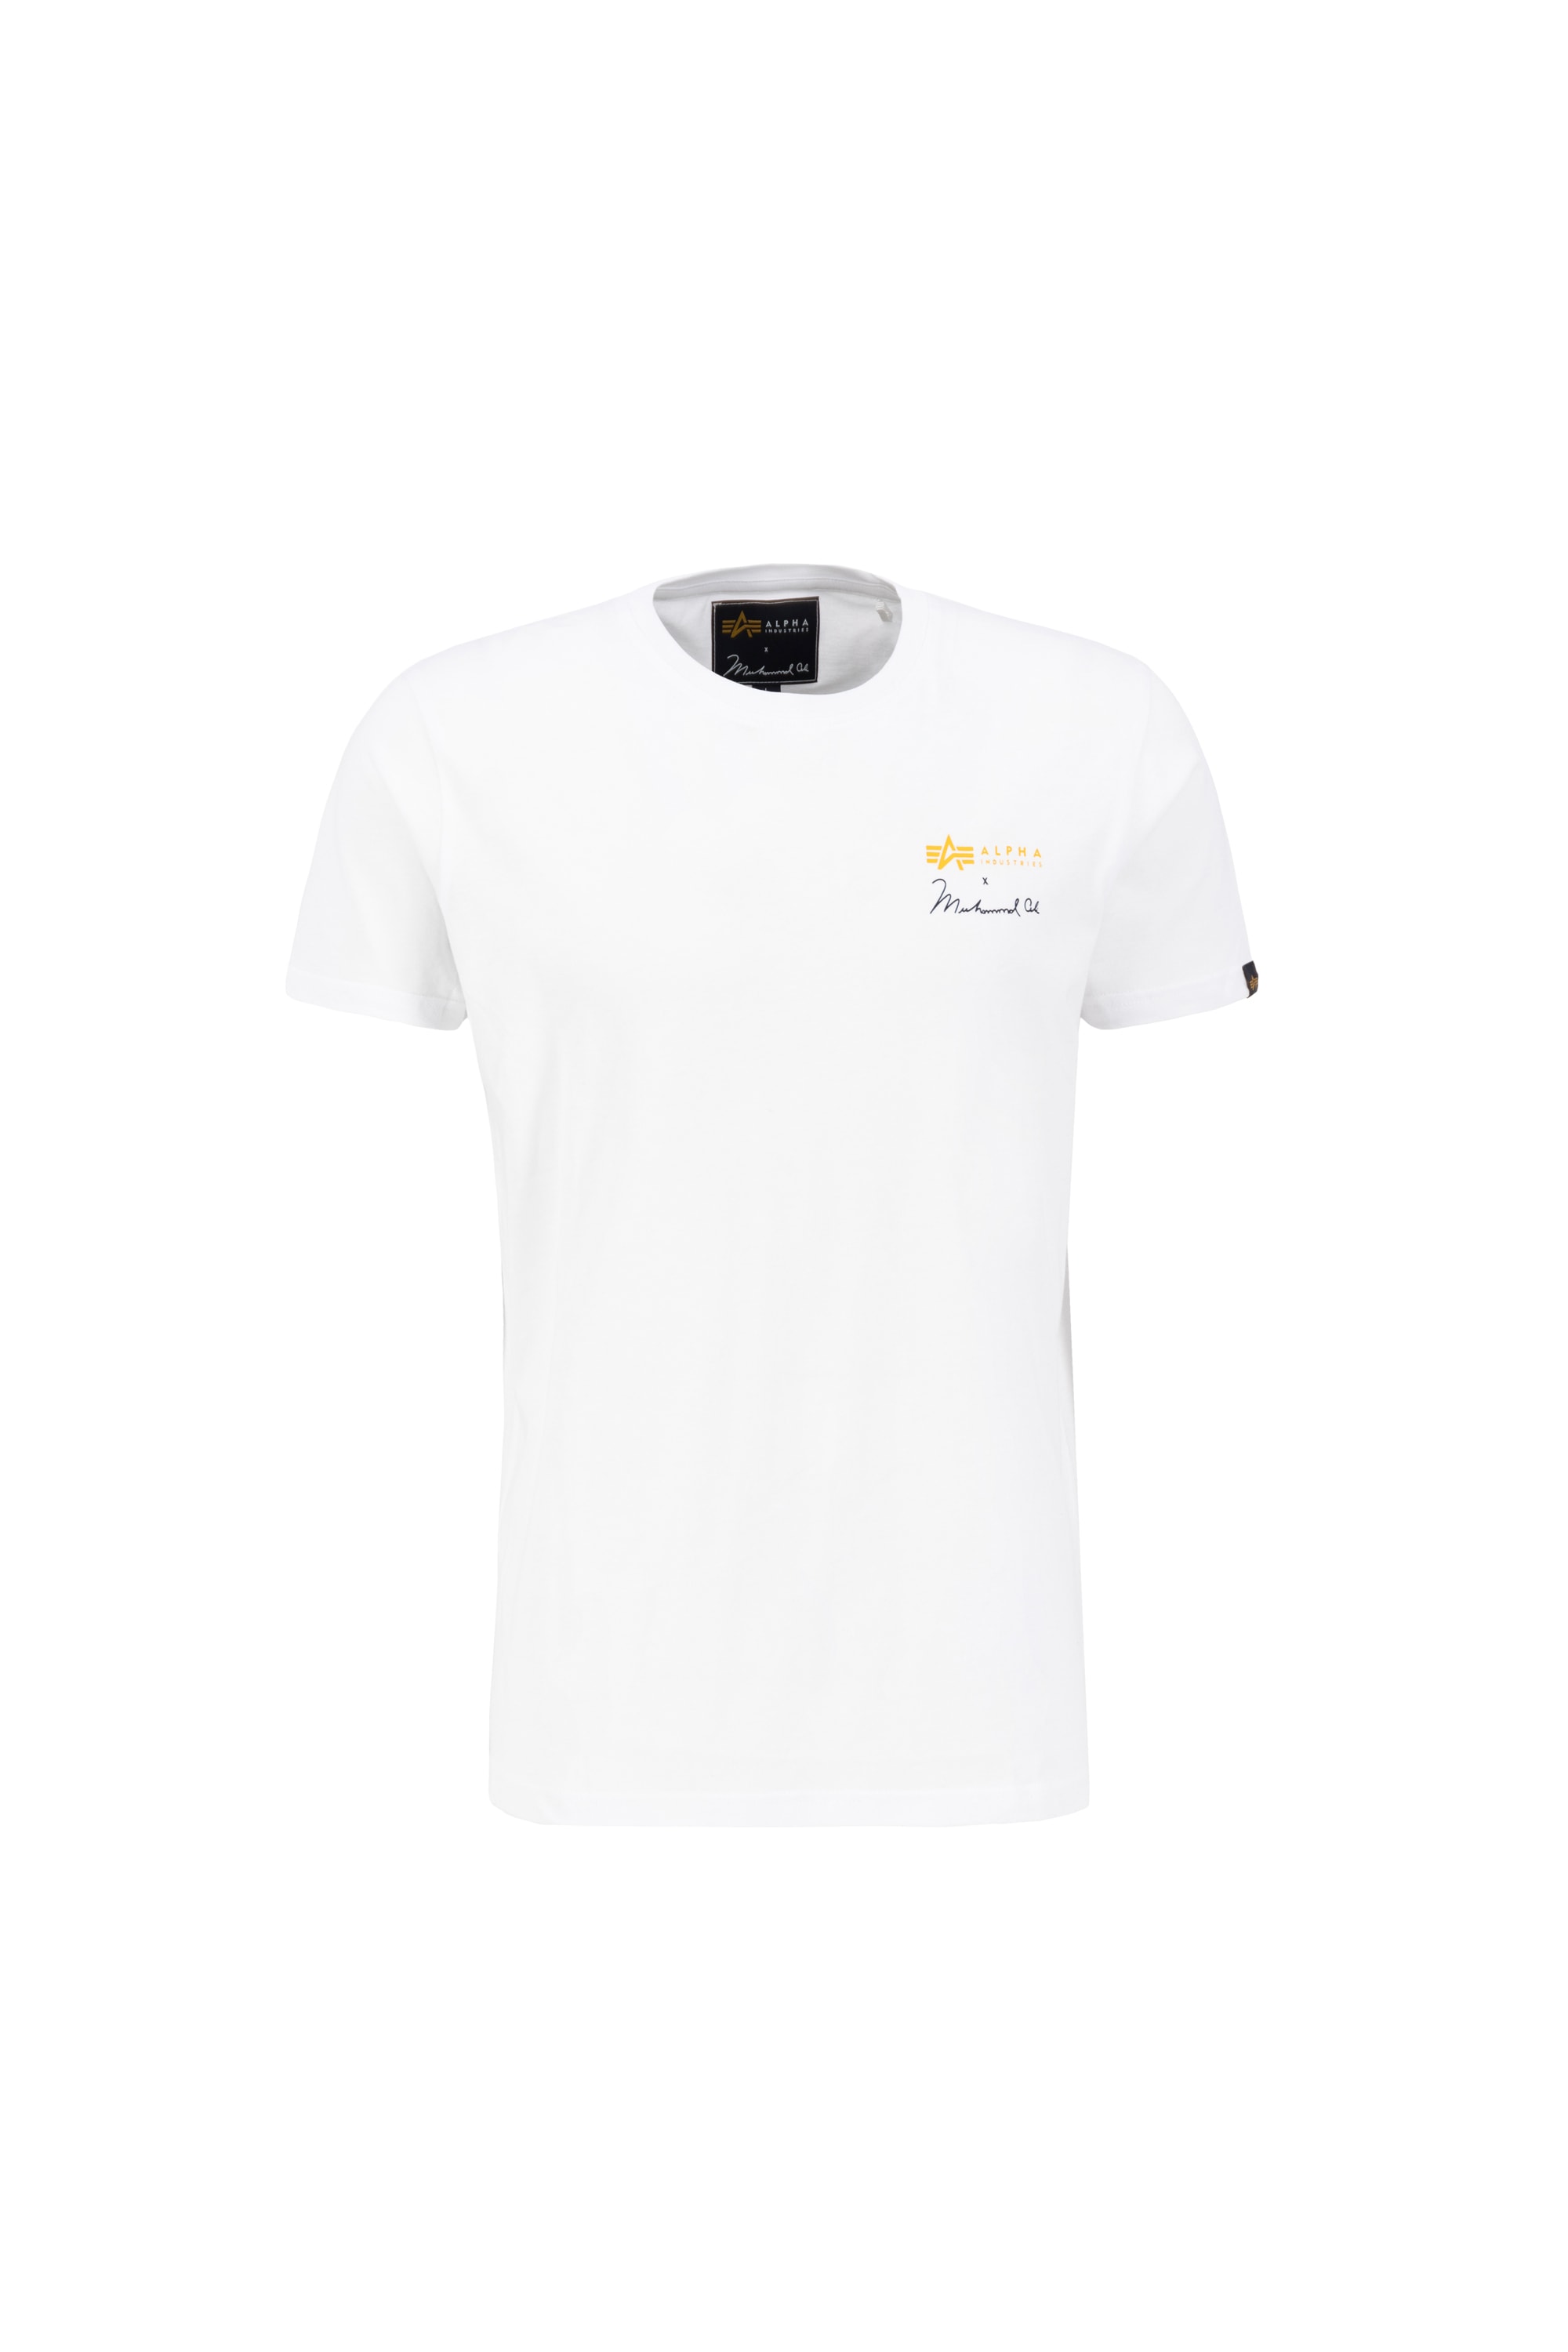 Industries T-Shirts online Alpha Men »Alpha BP T« - Industries Muhammad bei Ali T-Shirt